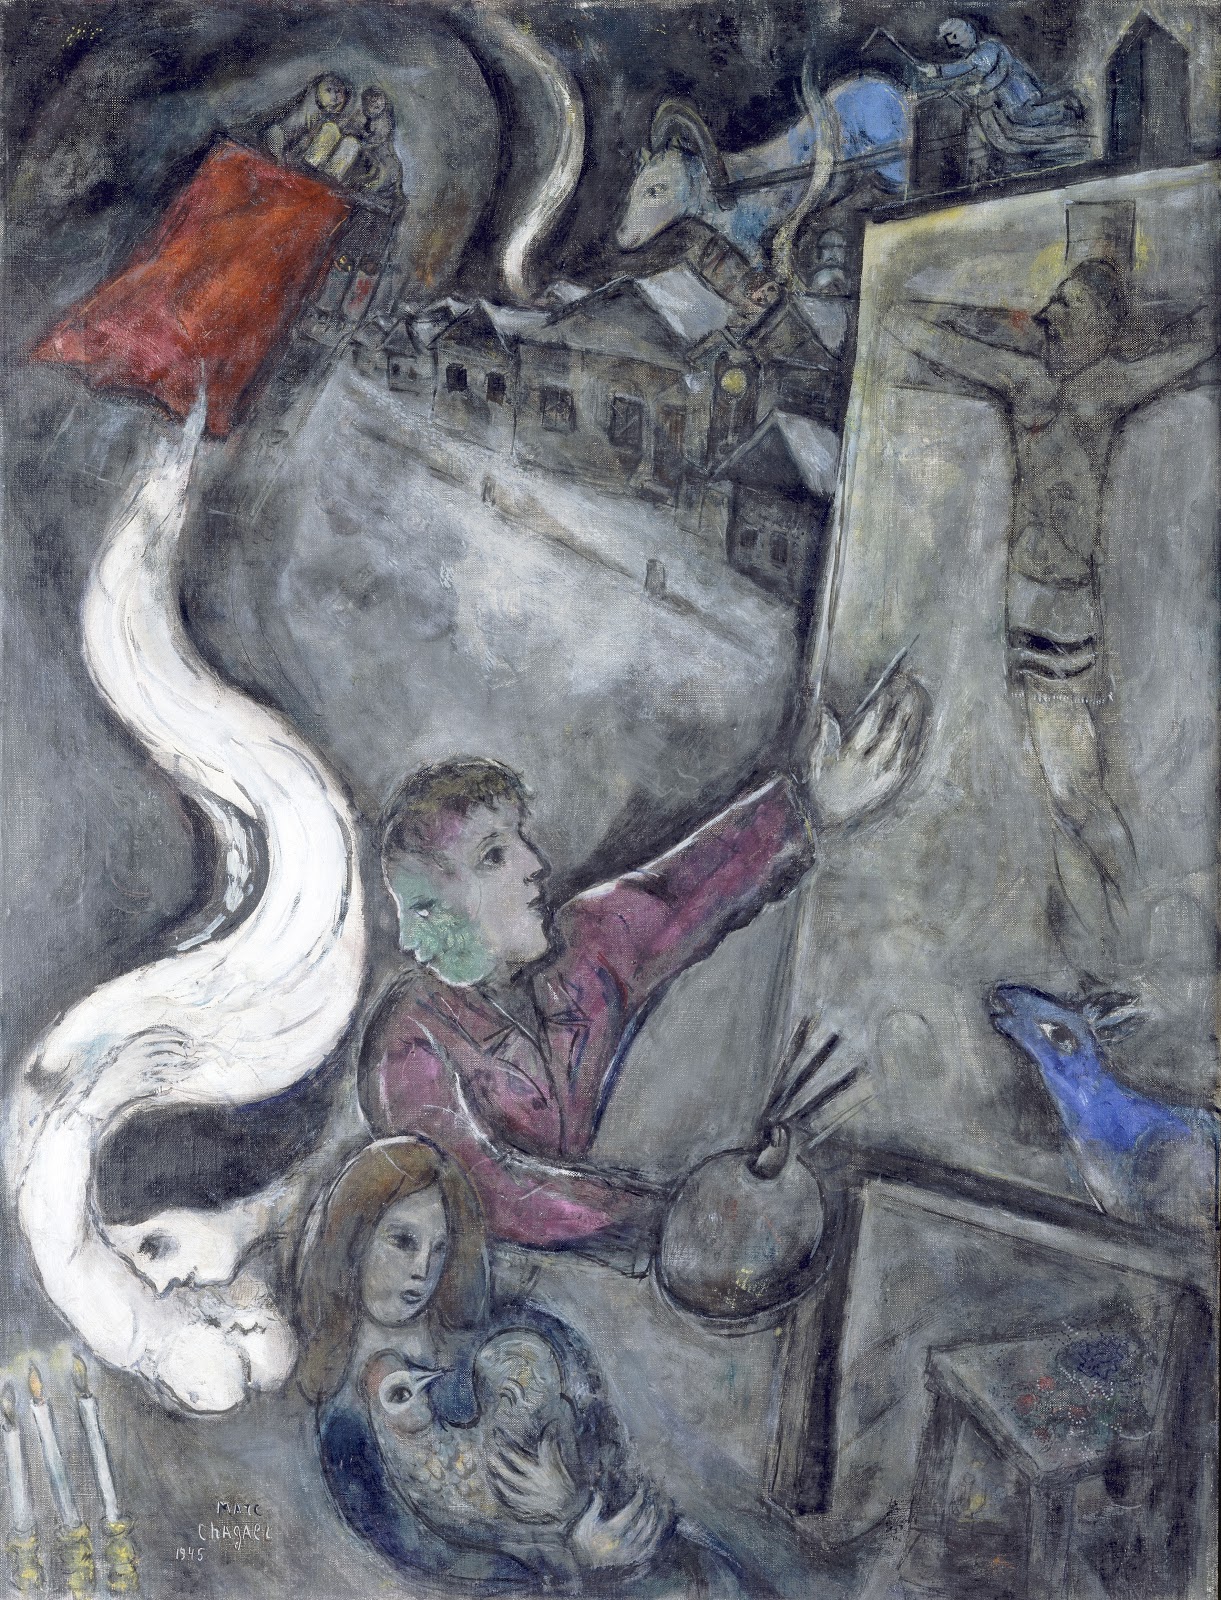 Marc+Chagall-1887-1985 (312).jpg